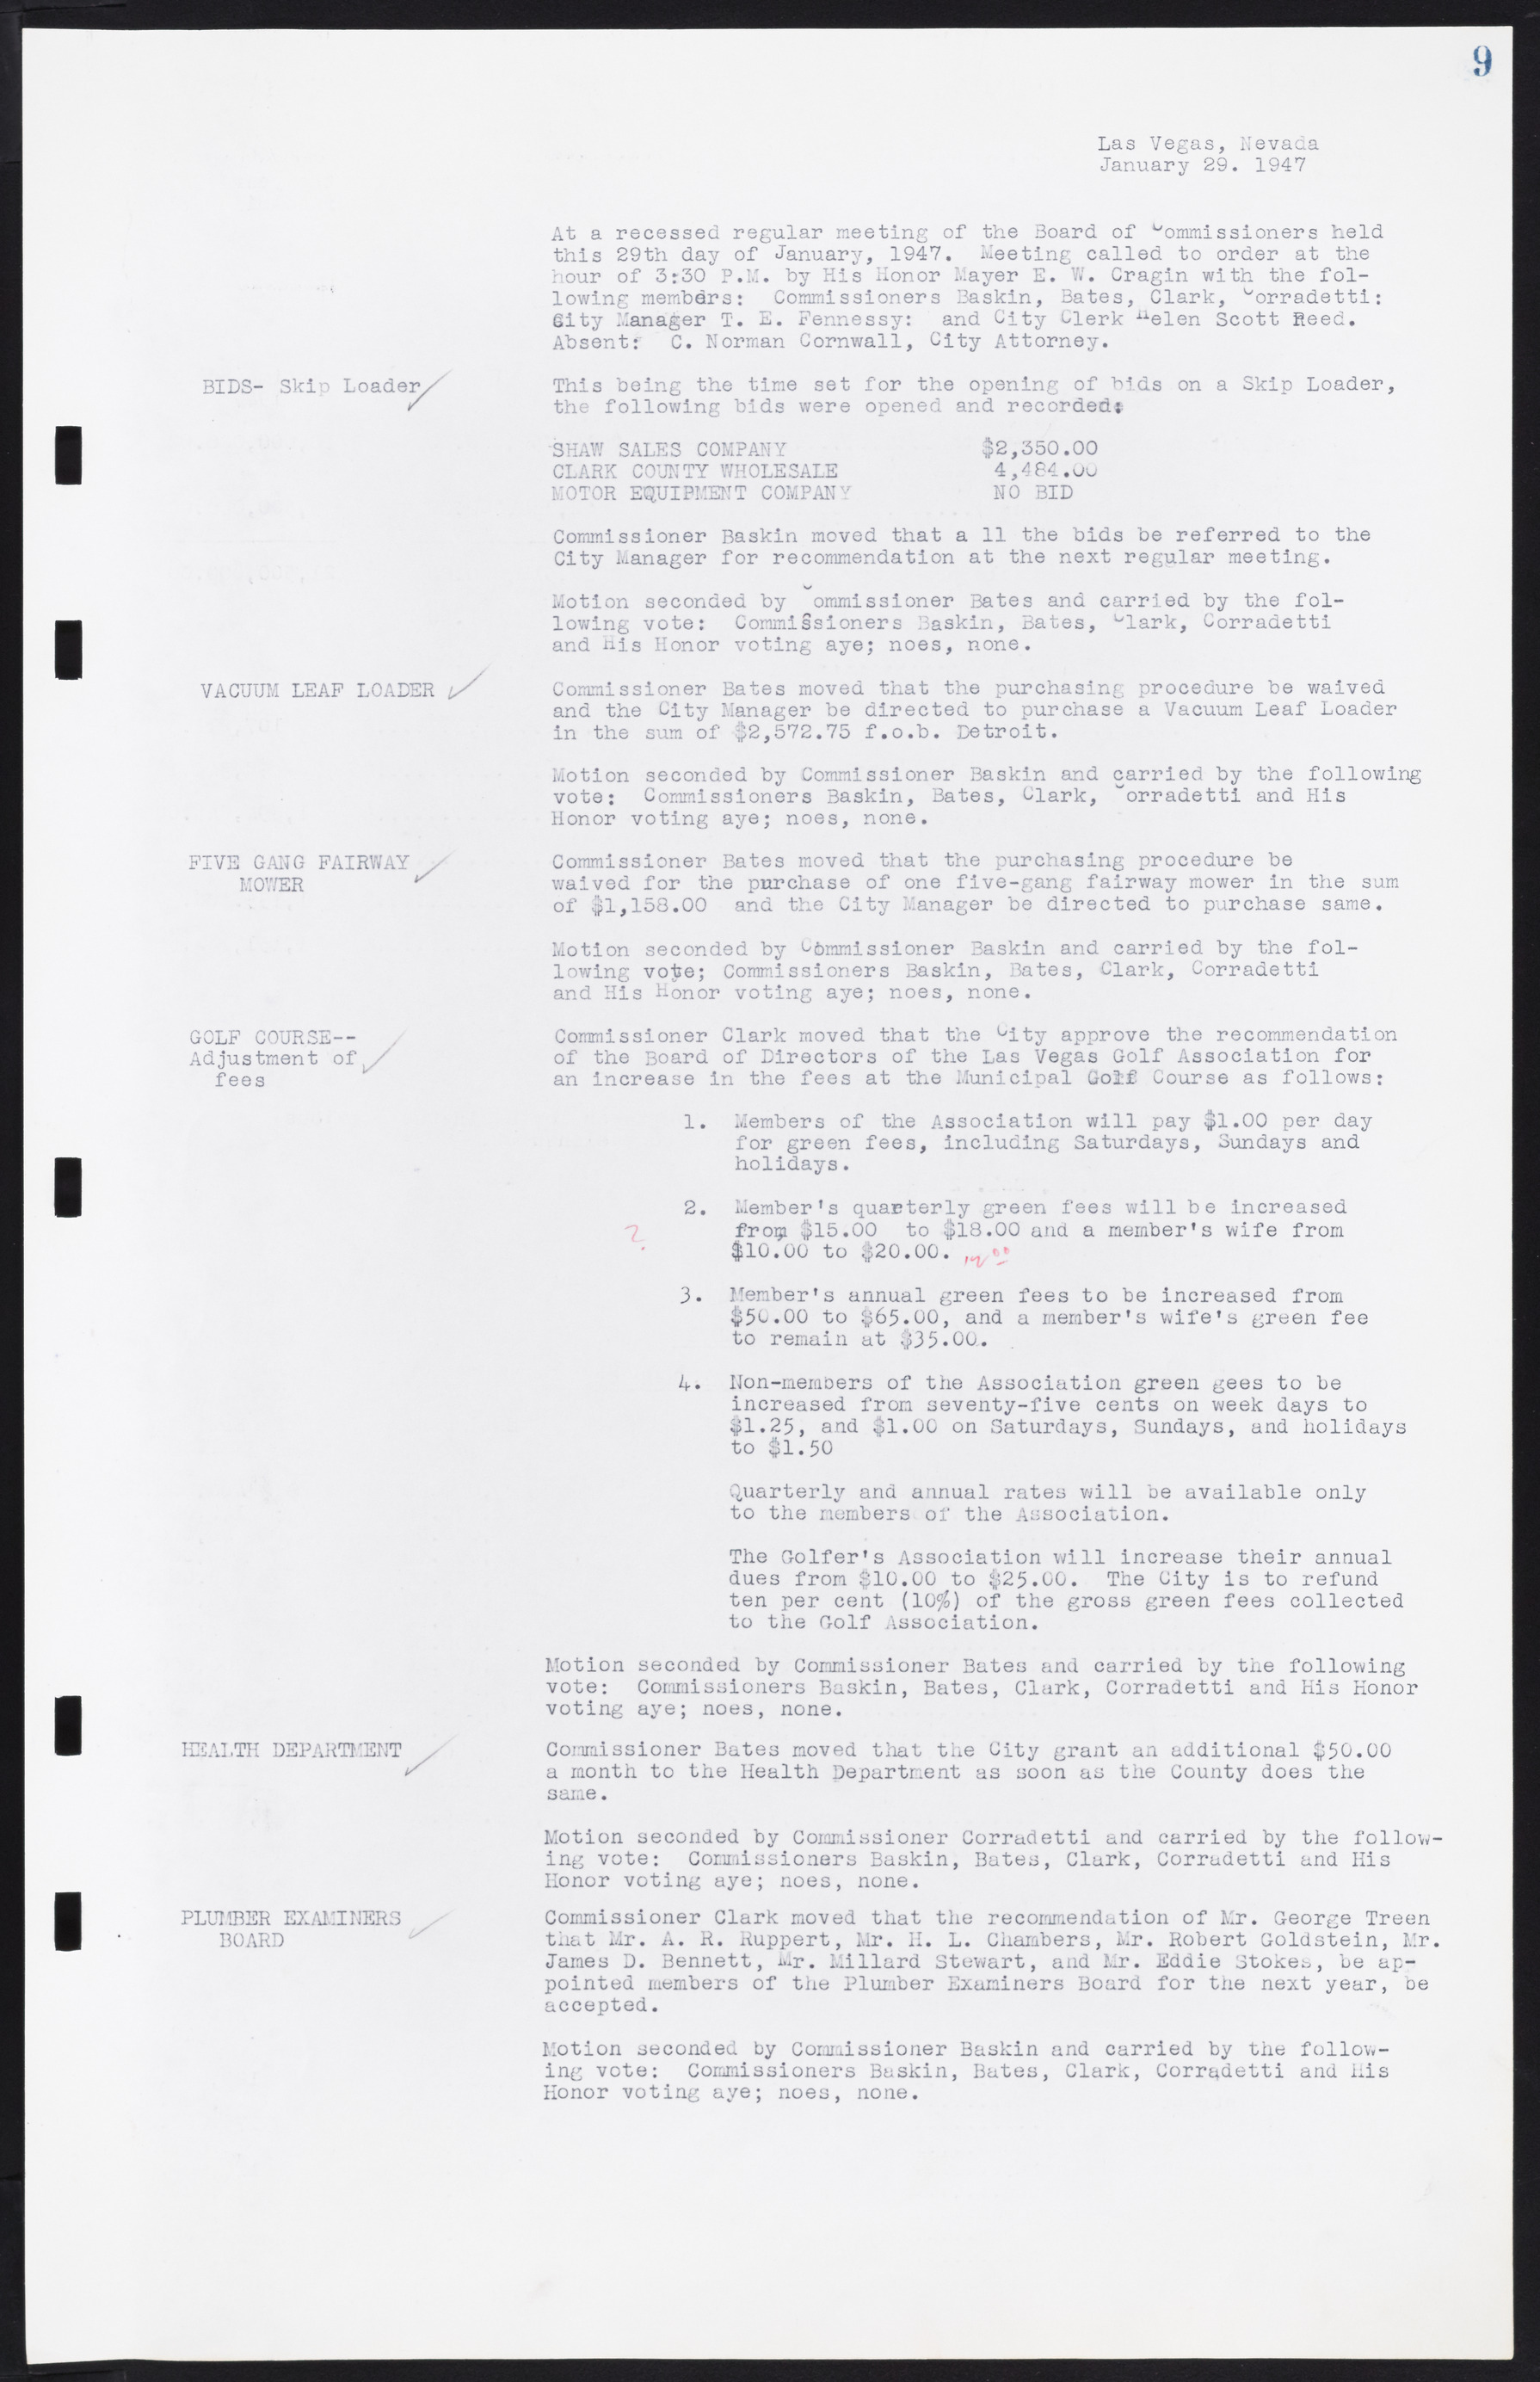 Las Vegas City Commission Minutes, January 7, 1947 to October 26, 1949, lvc000006-17